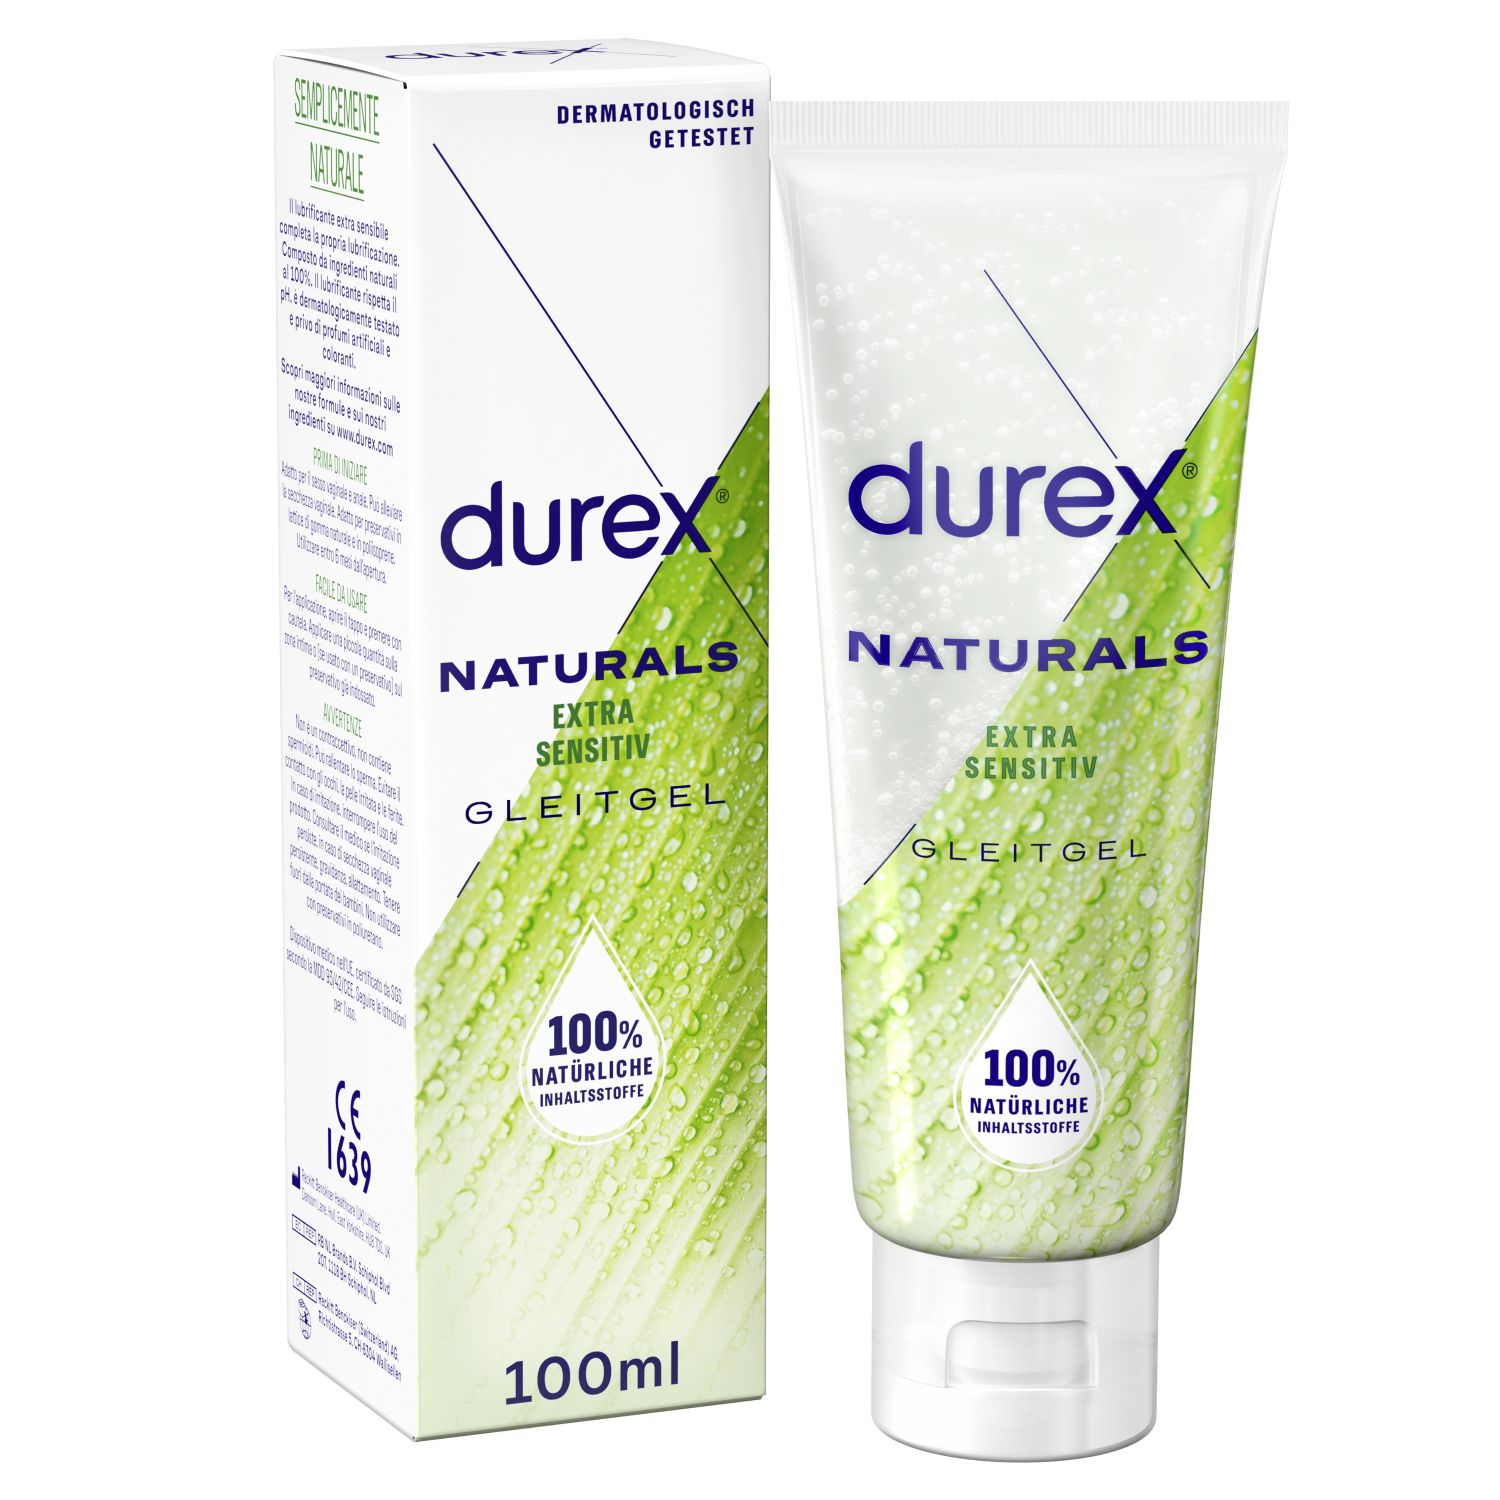 Durex Naturals Gleitgel 100ml